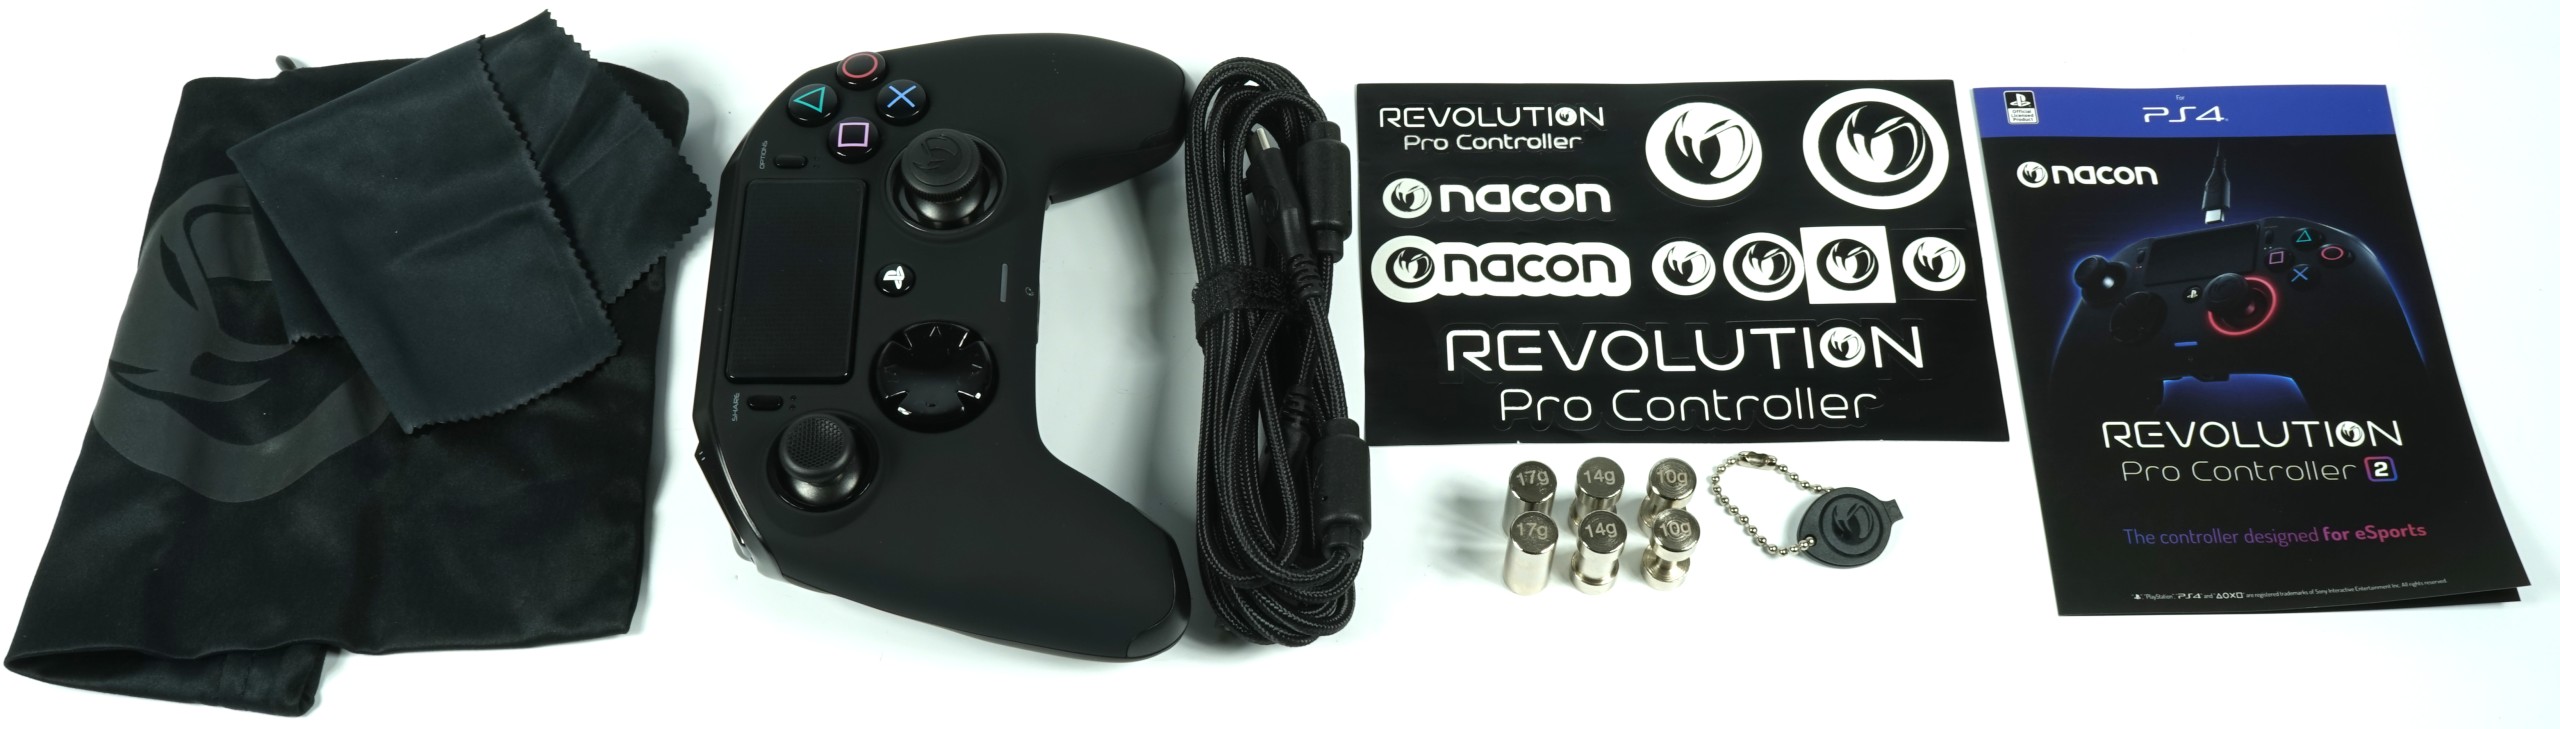 nacon revolution pro 2 software